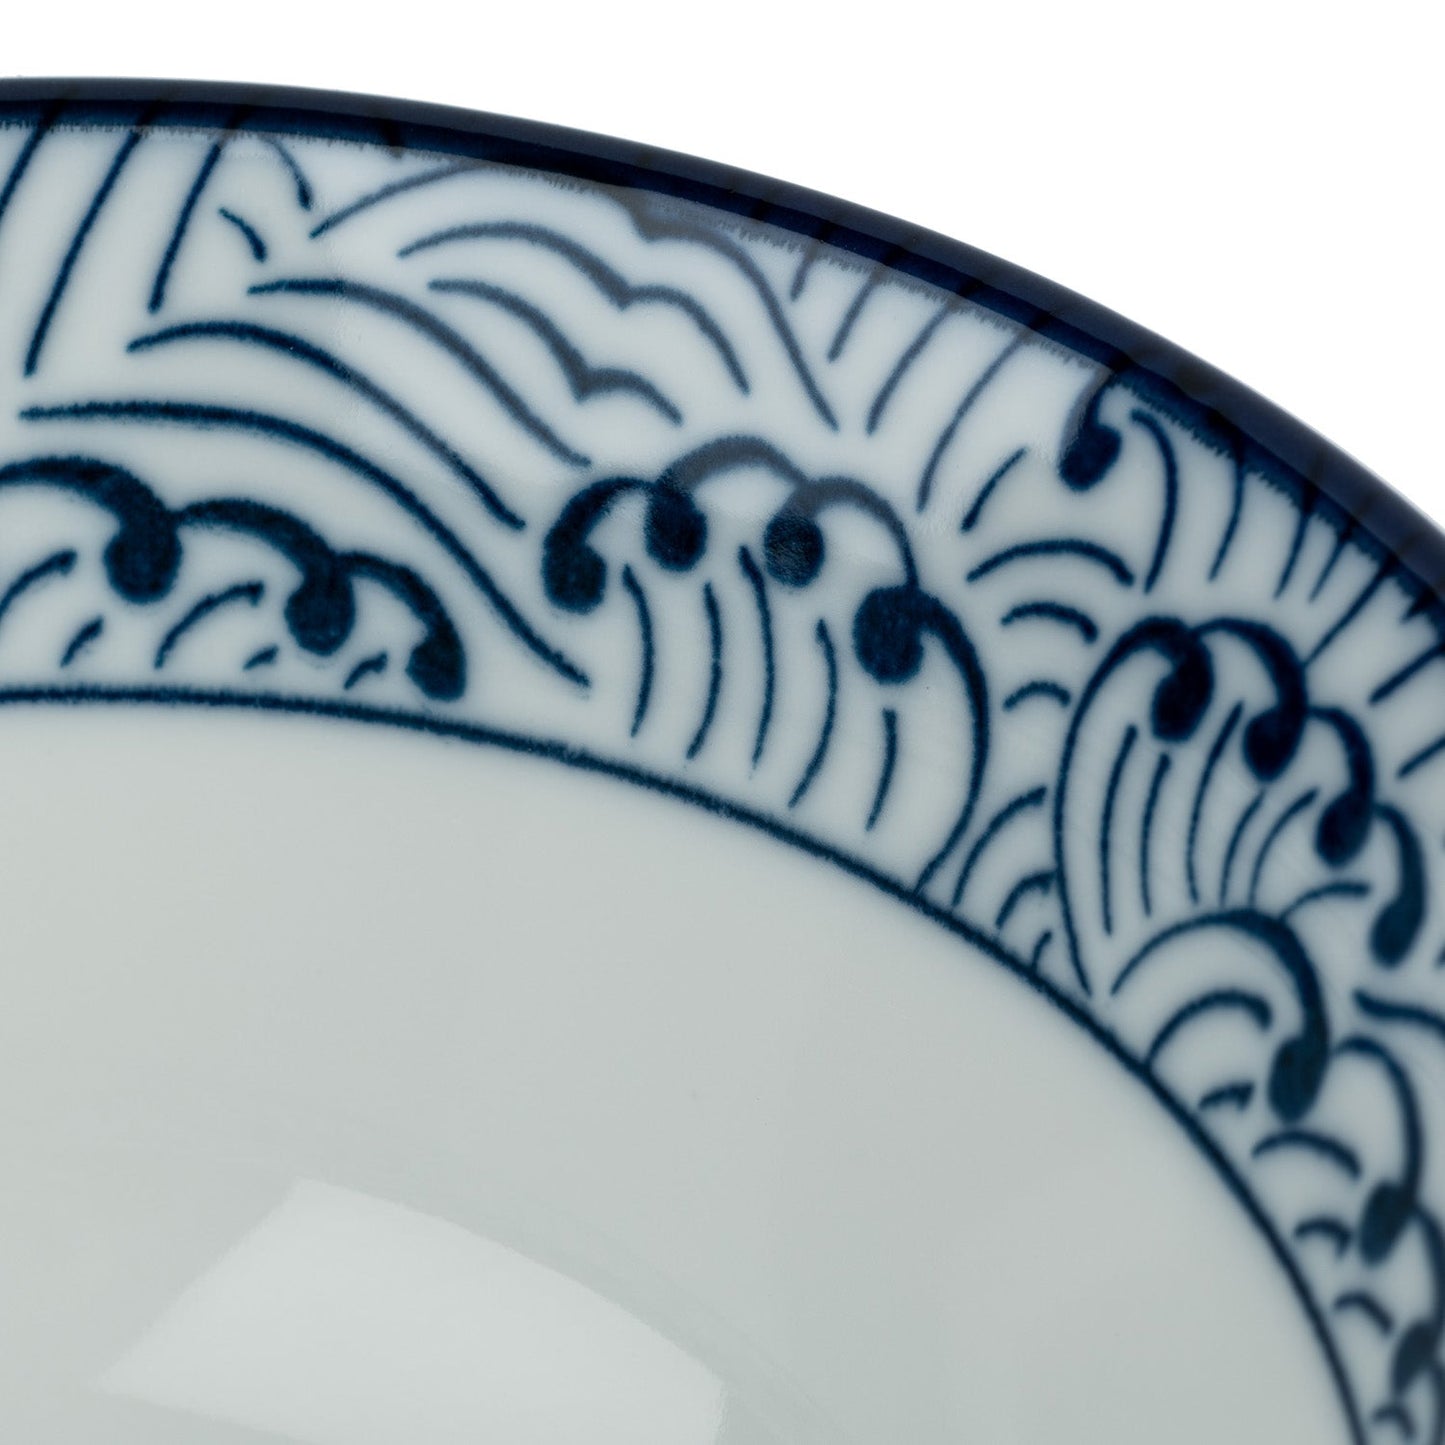 Hamon Blue Wave Japanese Rice Bowl detail